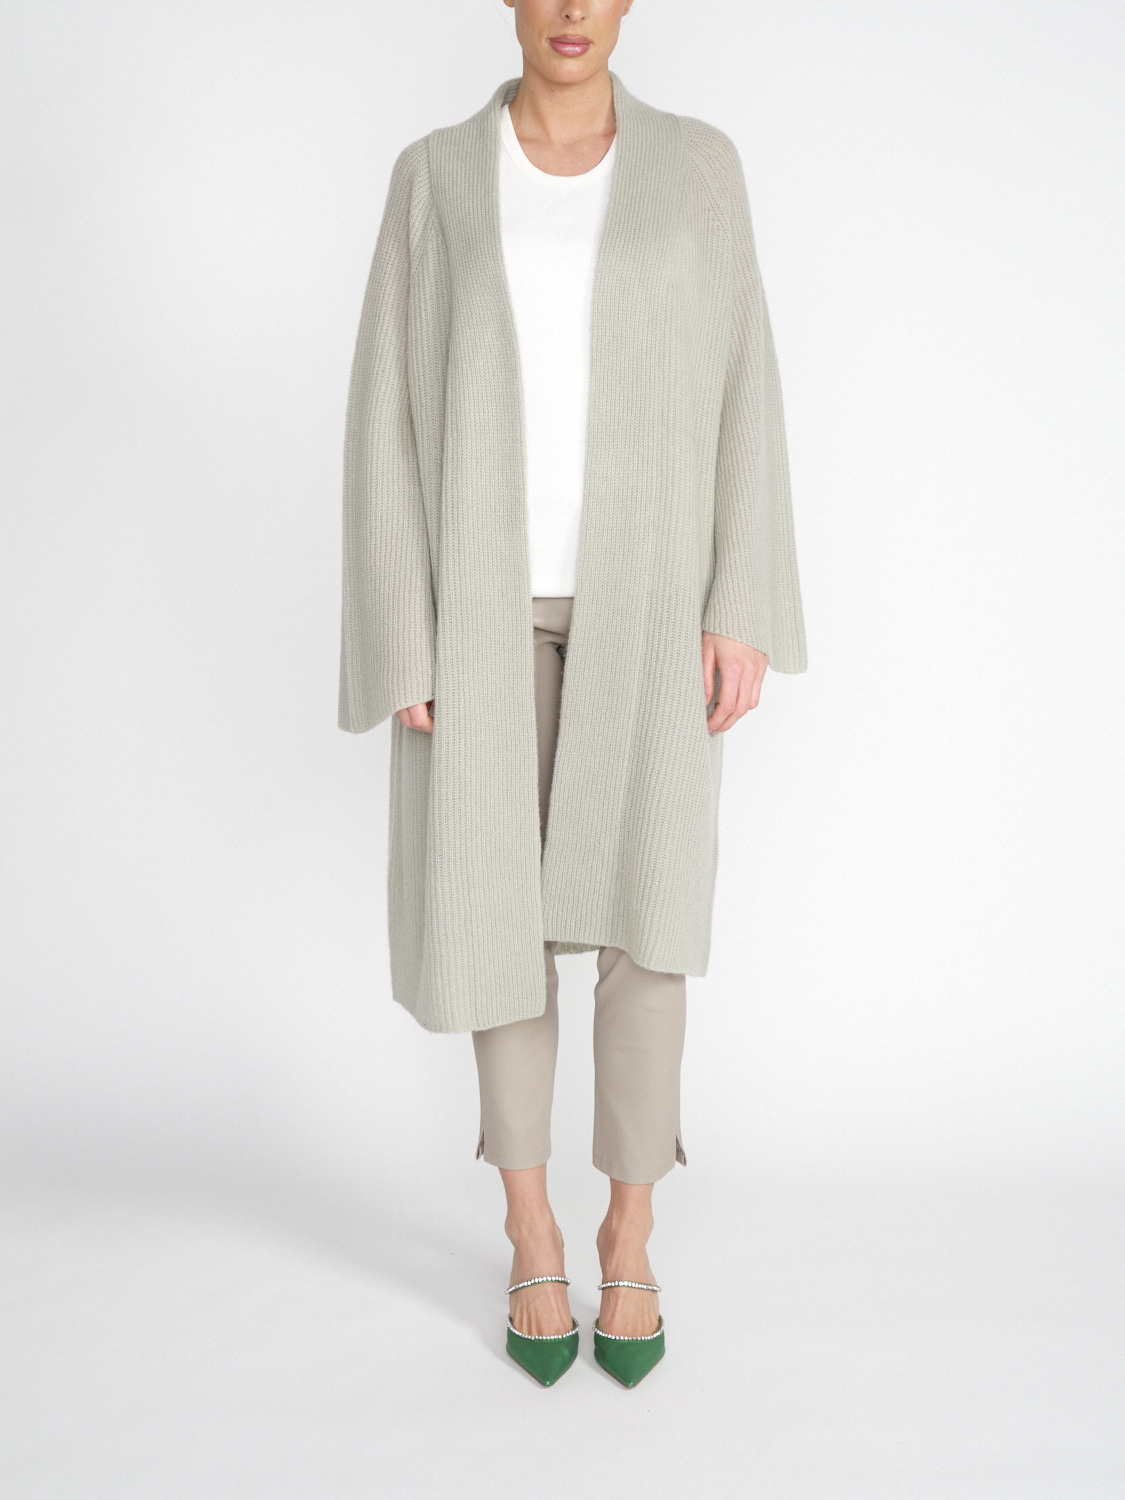 LU Ren Aphne - Knitted cardigan in cashmere-silk blend  hellgrün M